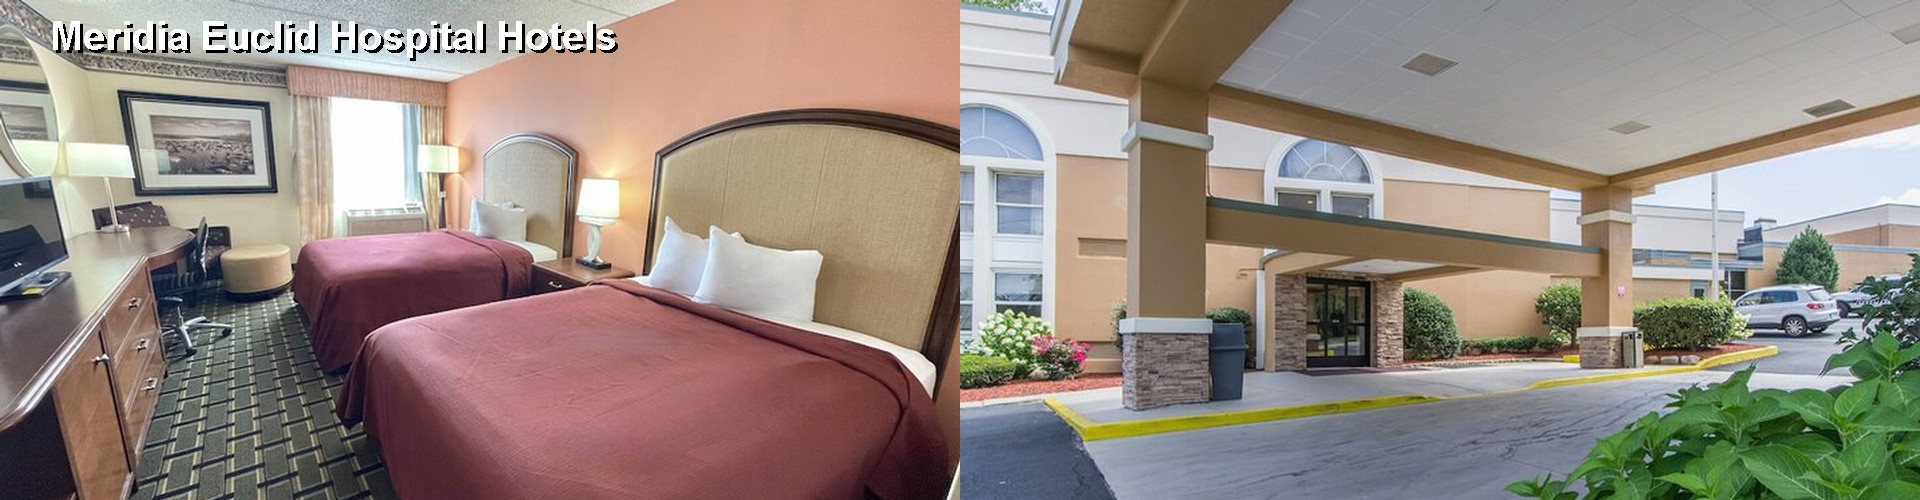 4 Best Hotels near Meridia Euclid Hospital